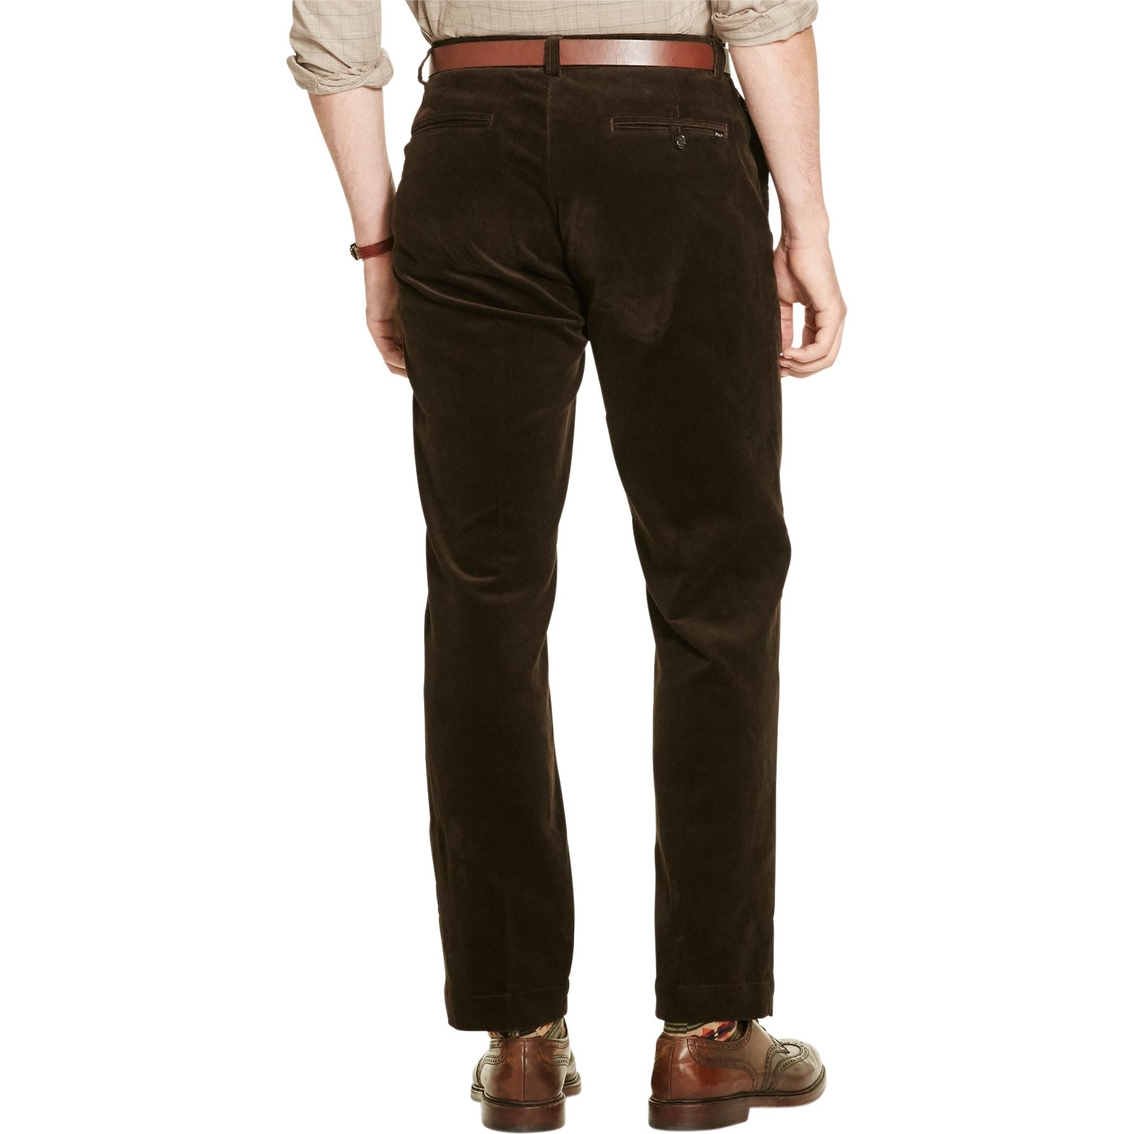 Polo Ralph Lauren Stretch Classic Fit Corduroy Pants | Pants | Clothing ...